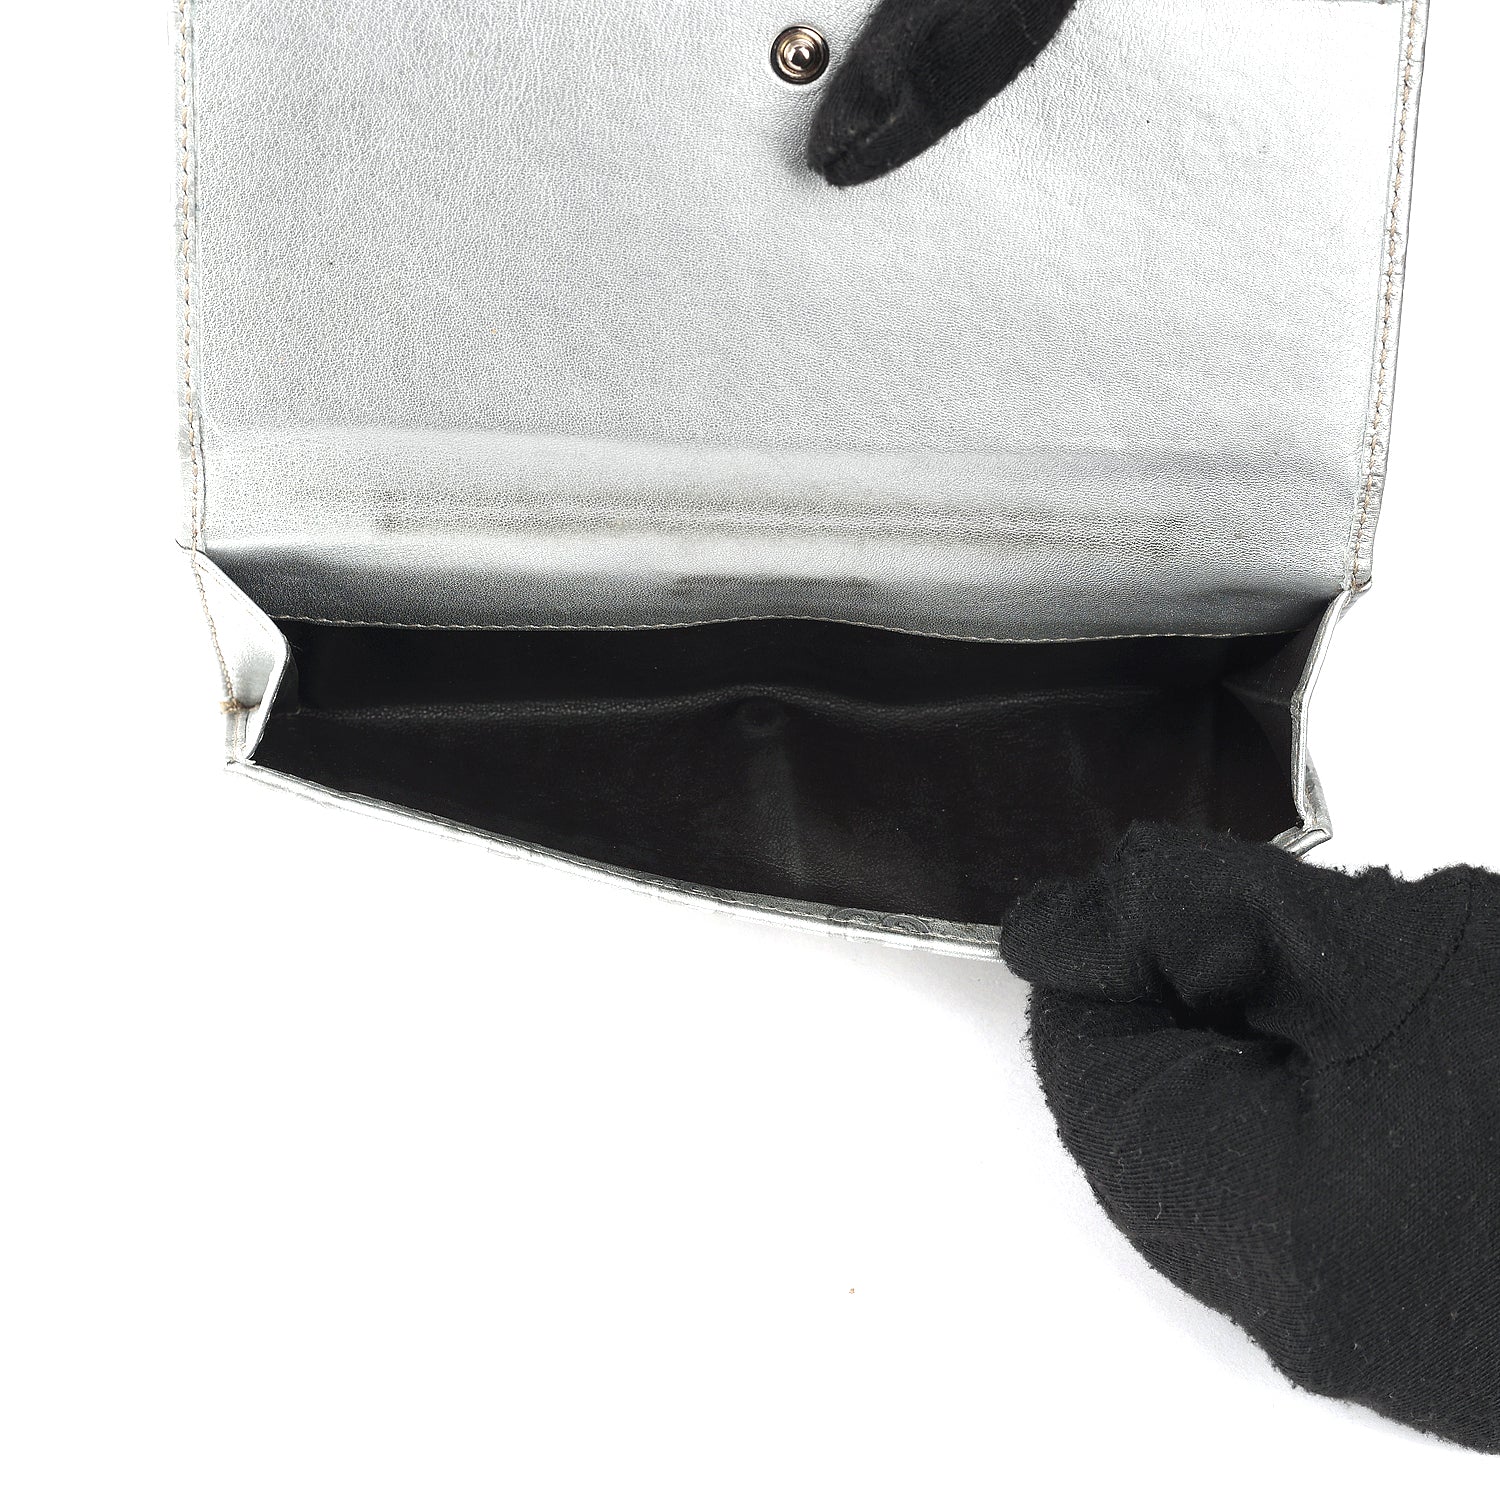 Guccissima Leather Interlocking G Continental Wallet